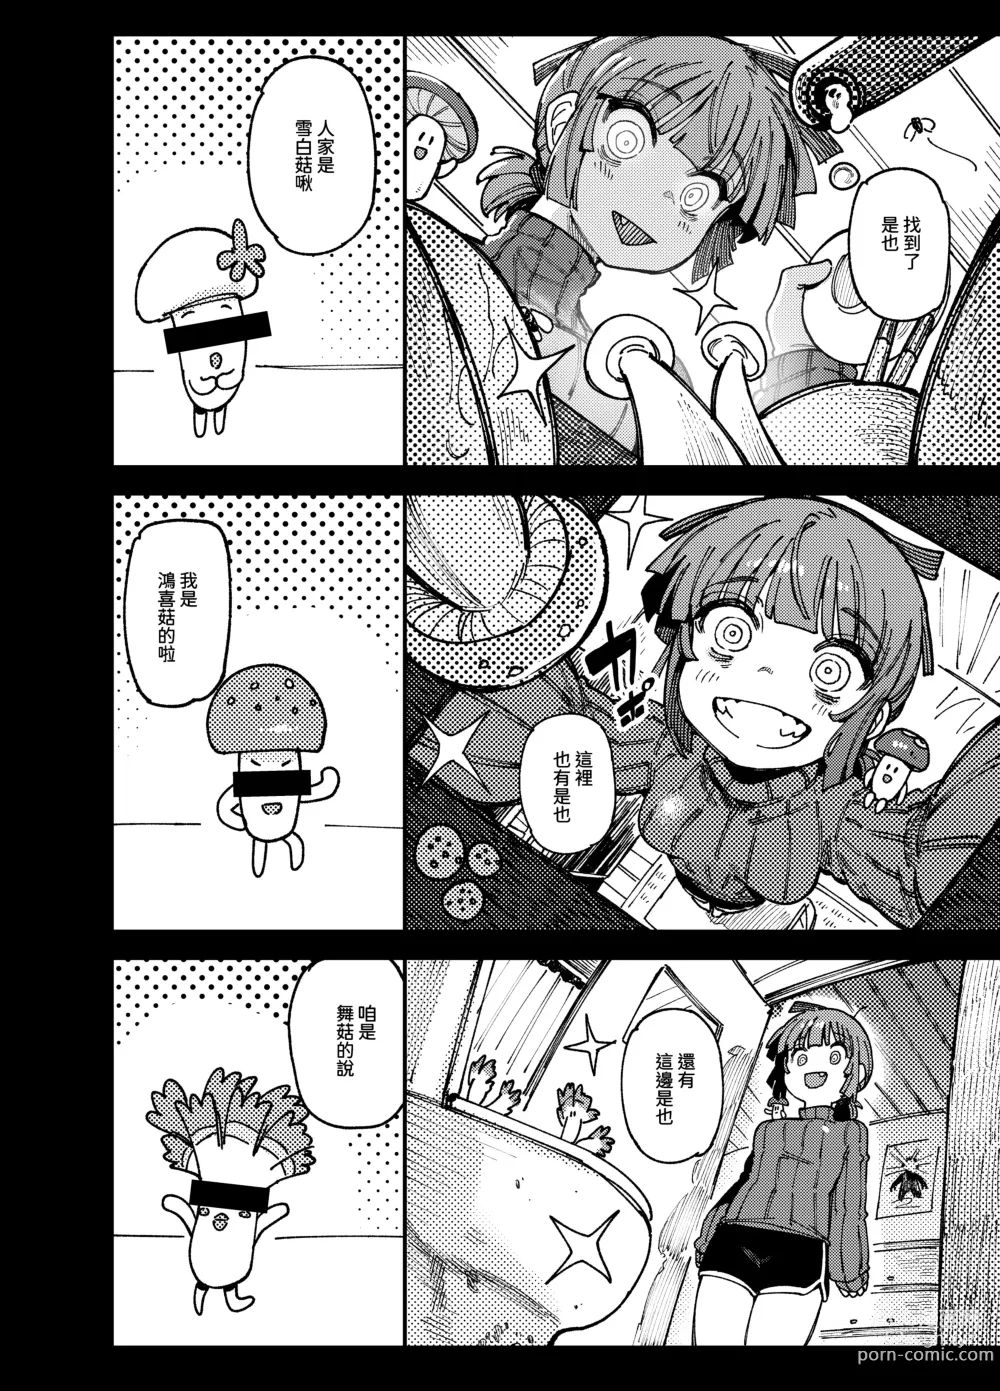 Page 7 of doujinshi 家裡過於潮濕長出致幻蘑菇意外誤食後發情的那些事